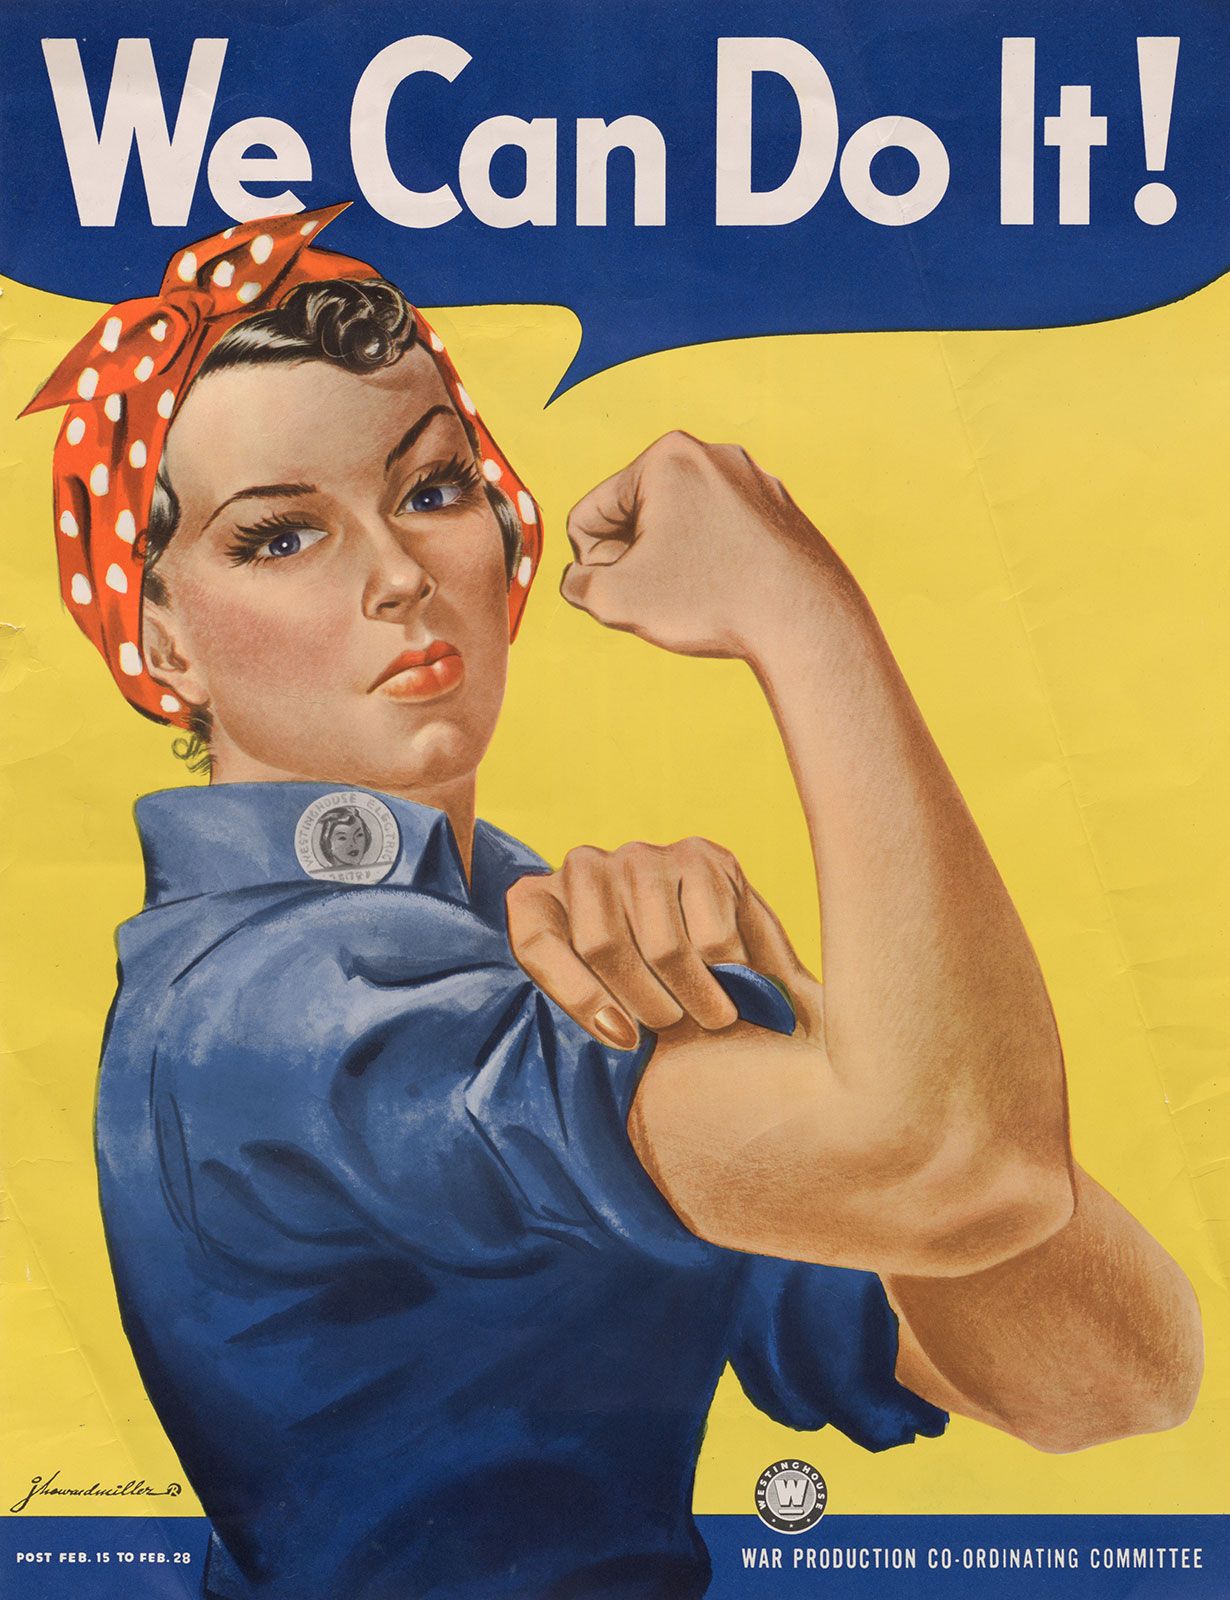 Rosie-the-Riveter-We-Can-Do-It-poster-J-Howard-Miller-circa-1942-1943-World-War-II.jpg